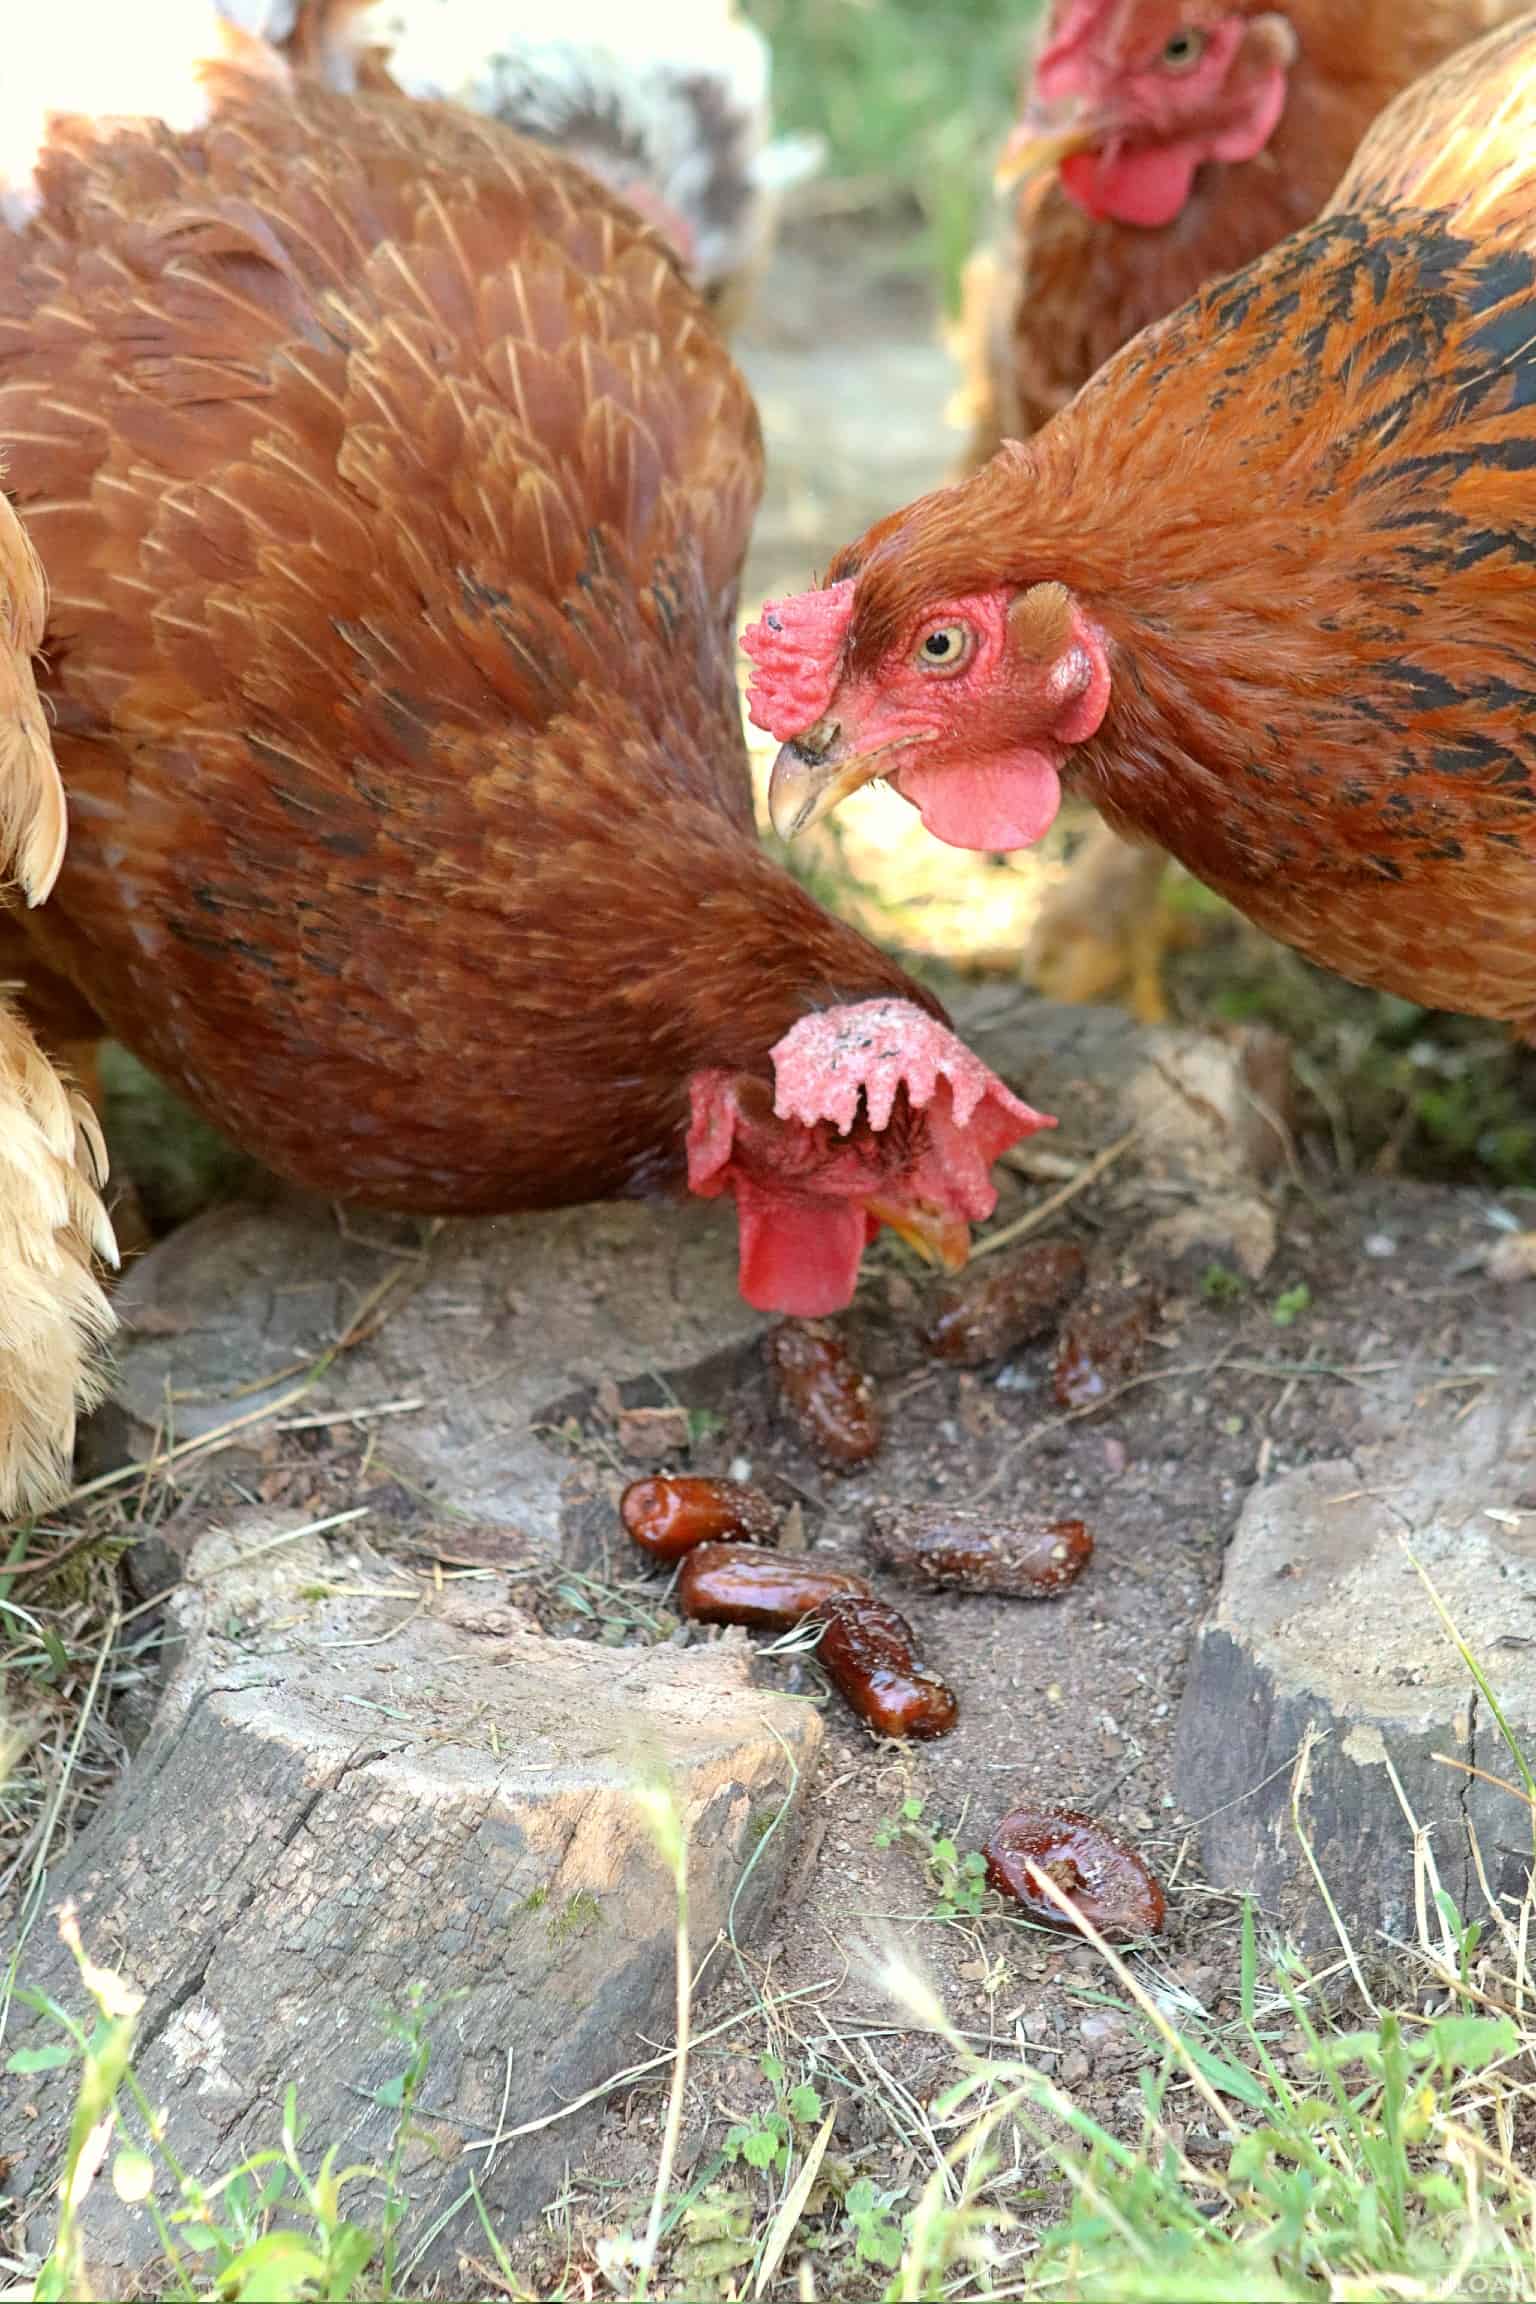 a few chickens enjoying some dates